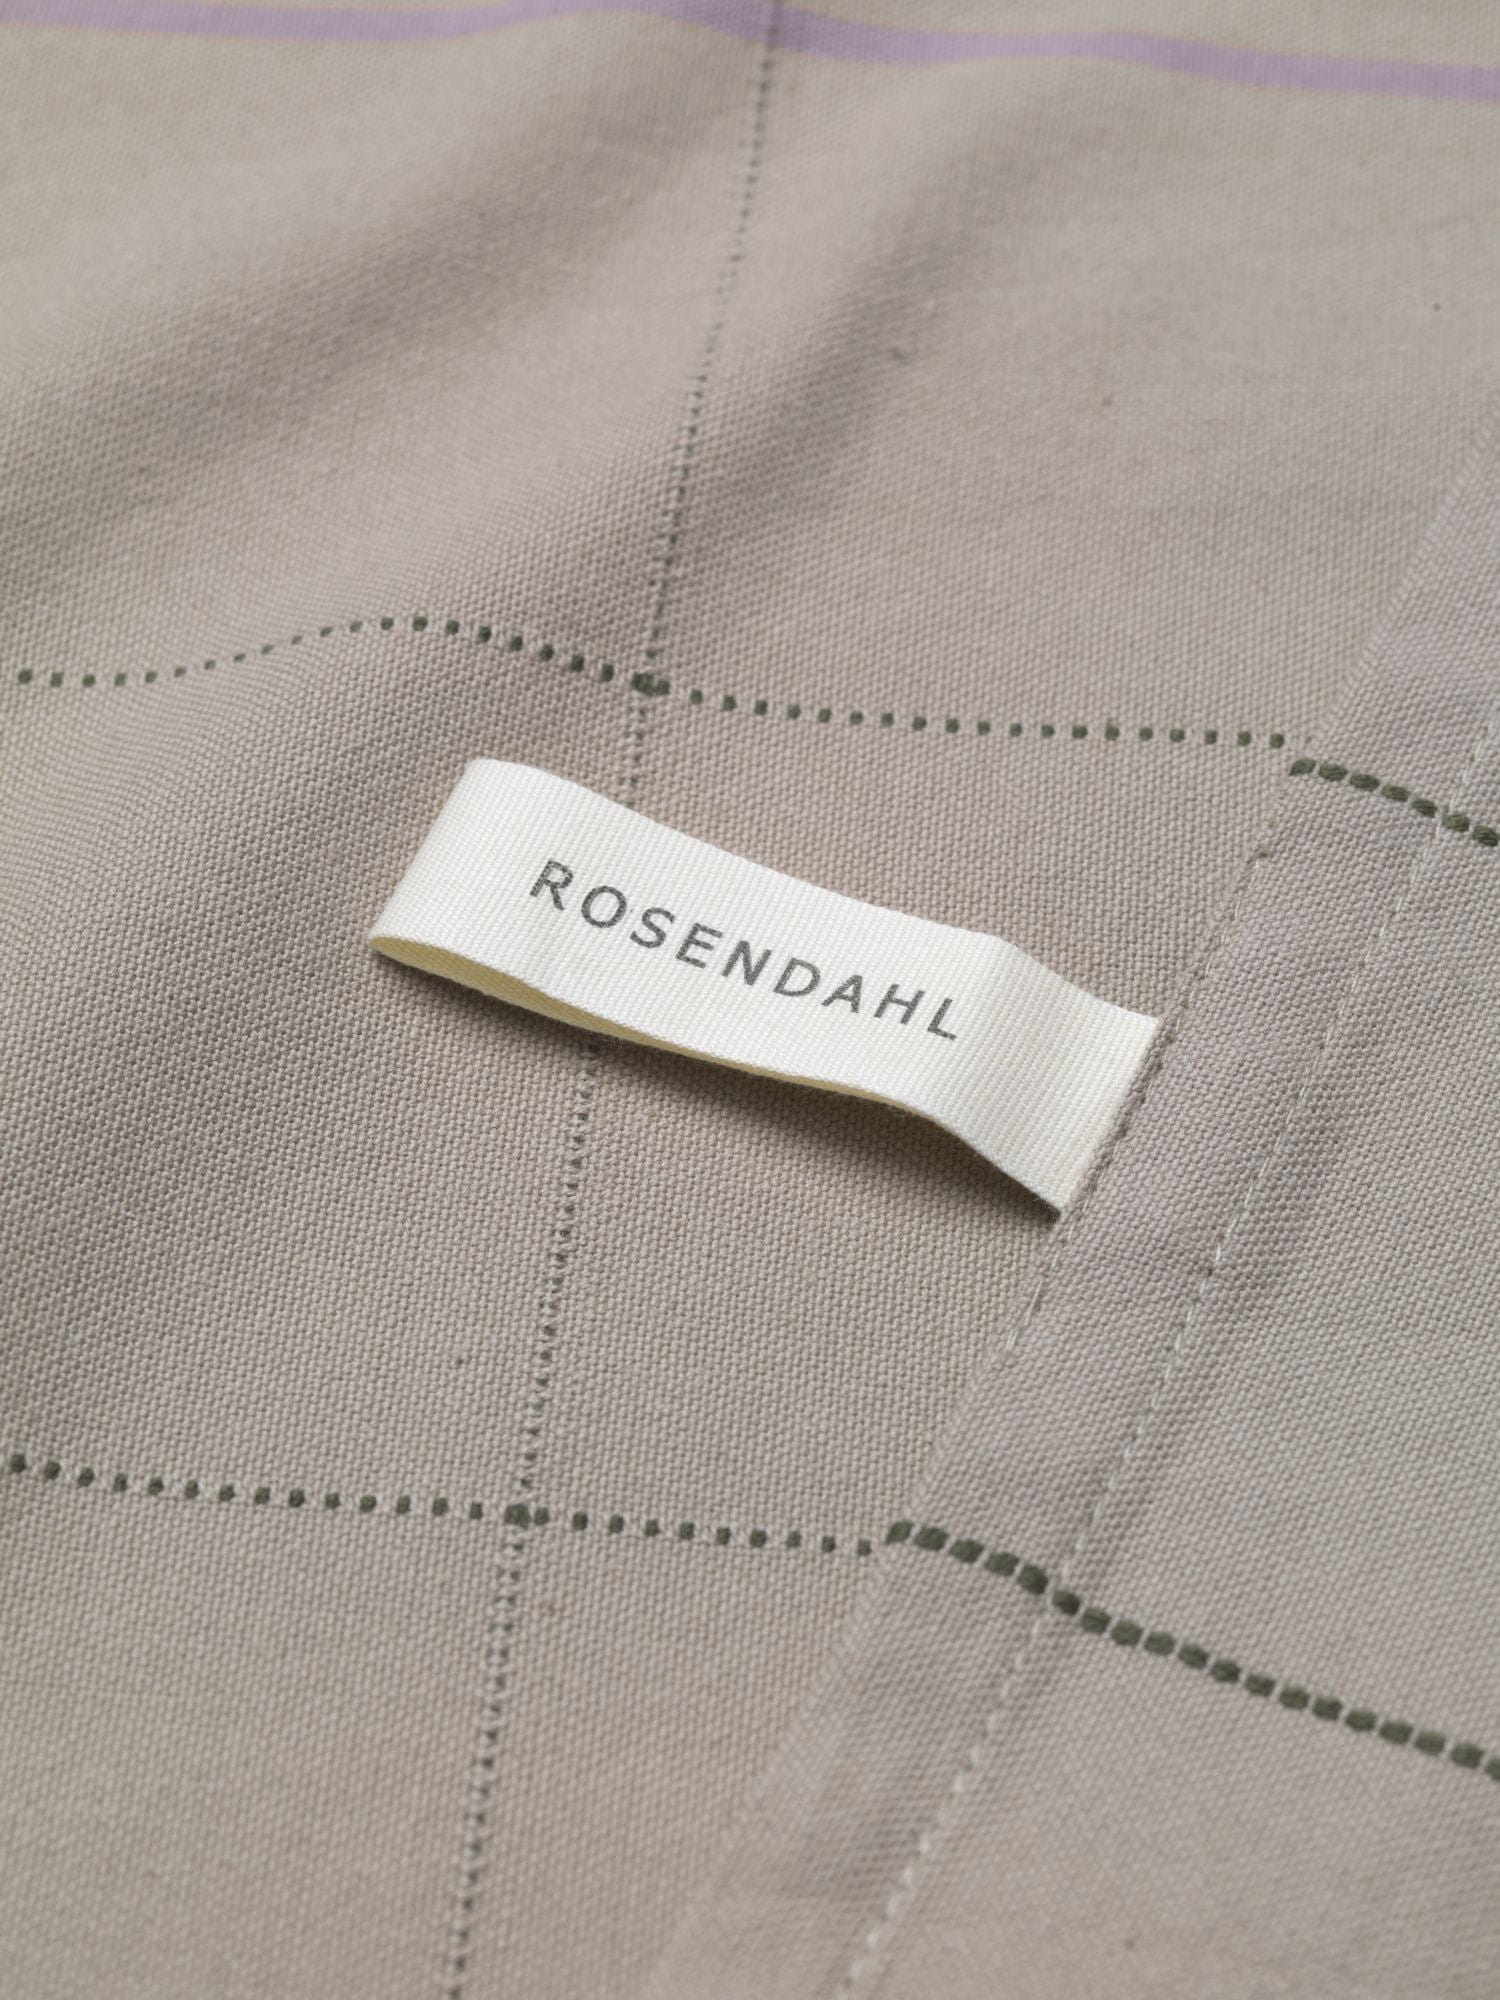 Rosendahl Rosendahl Textiles Gamma Viskestykke 50x70 Cm, Mørk Sand